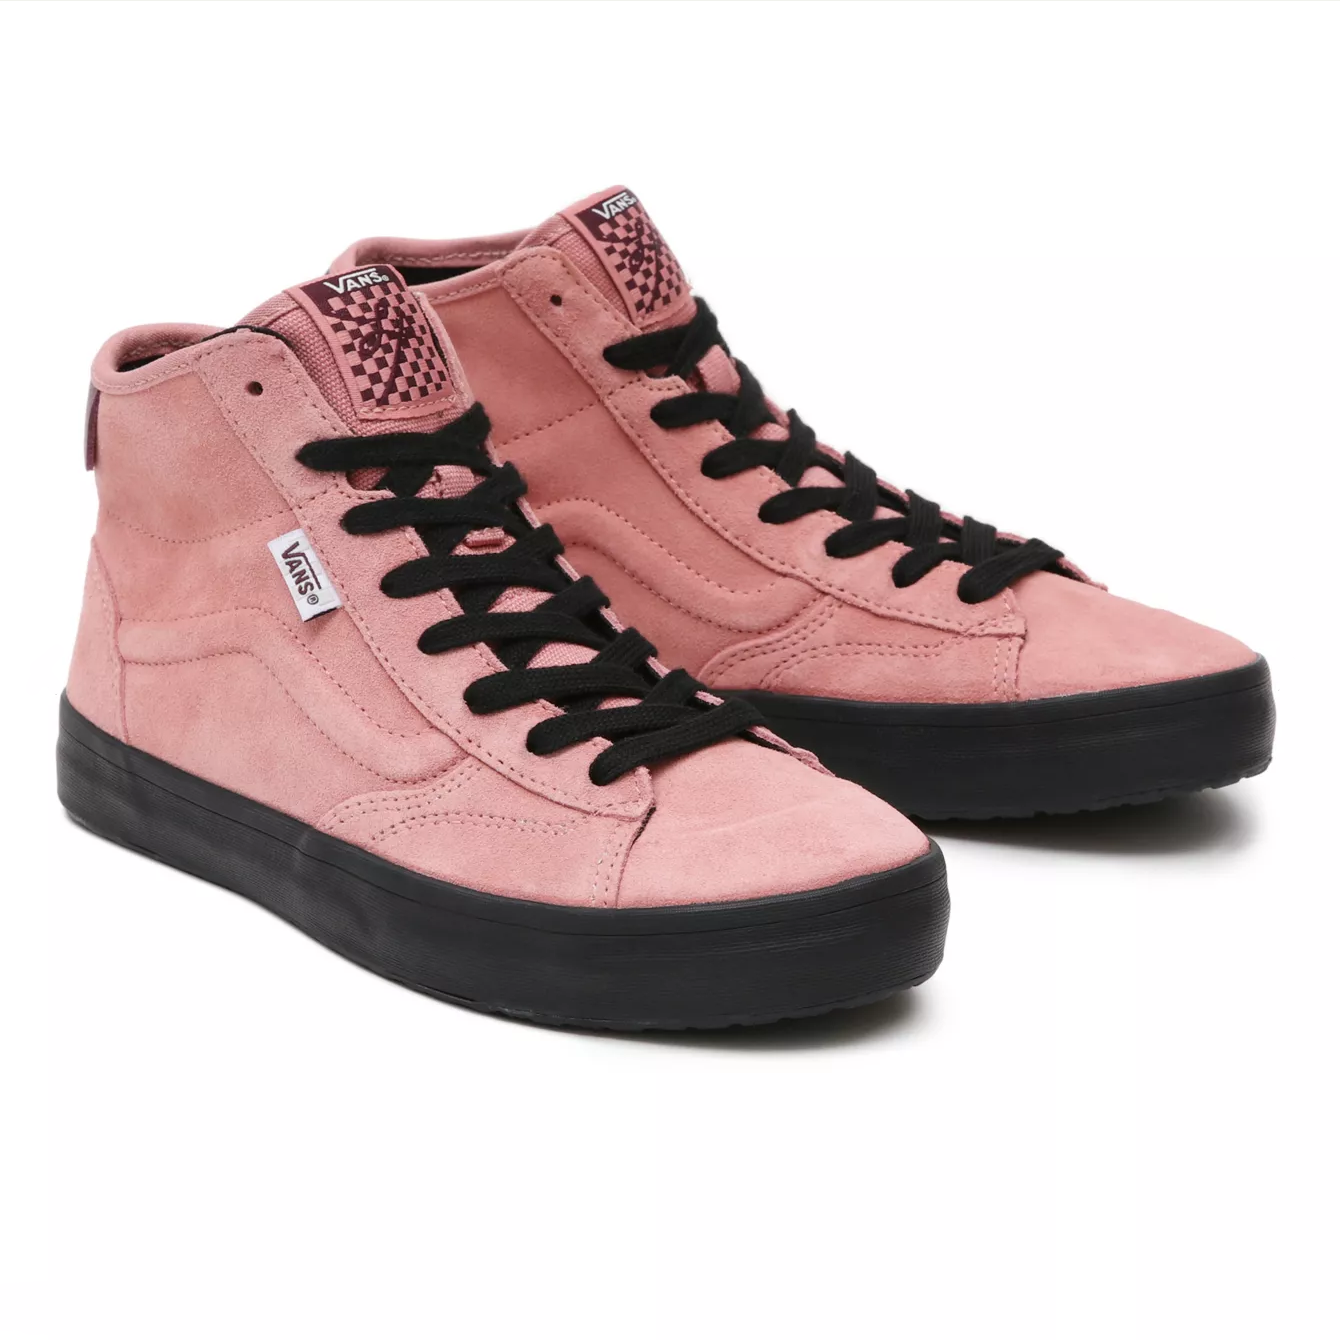 Vans Skate The Lizzie Rosette (Pink/Black) Skate Shoe